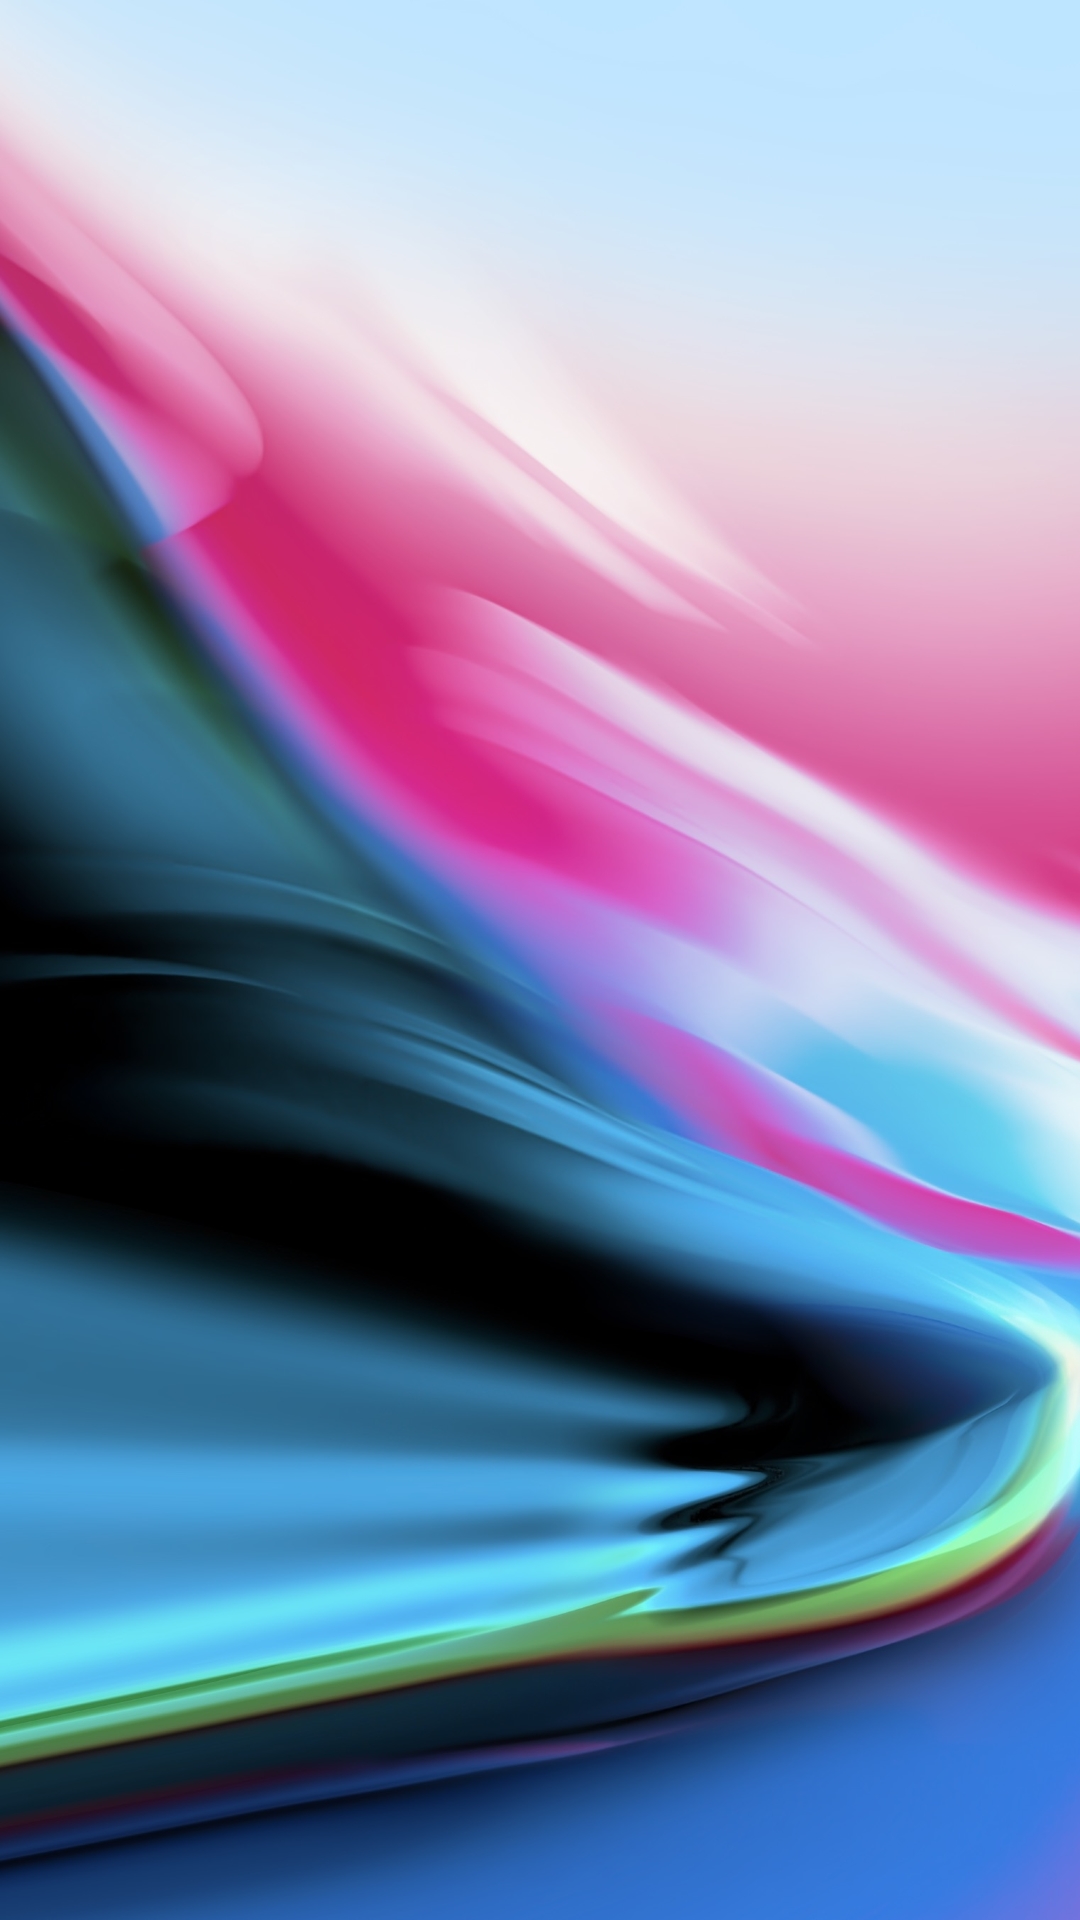 ios hd wallpaper 1080p,rosa,blau,linie,nahansicht,grafikdesign